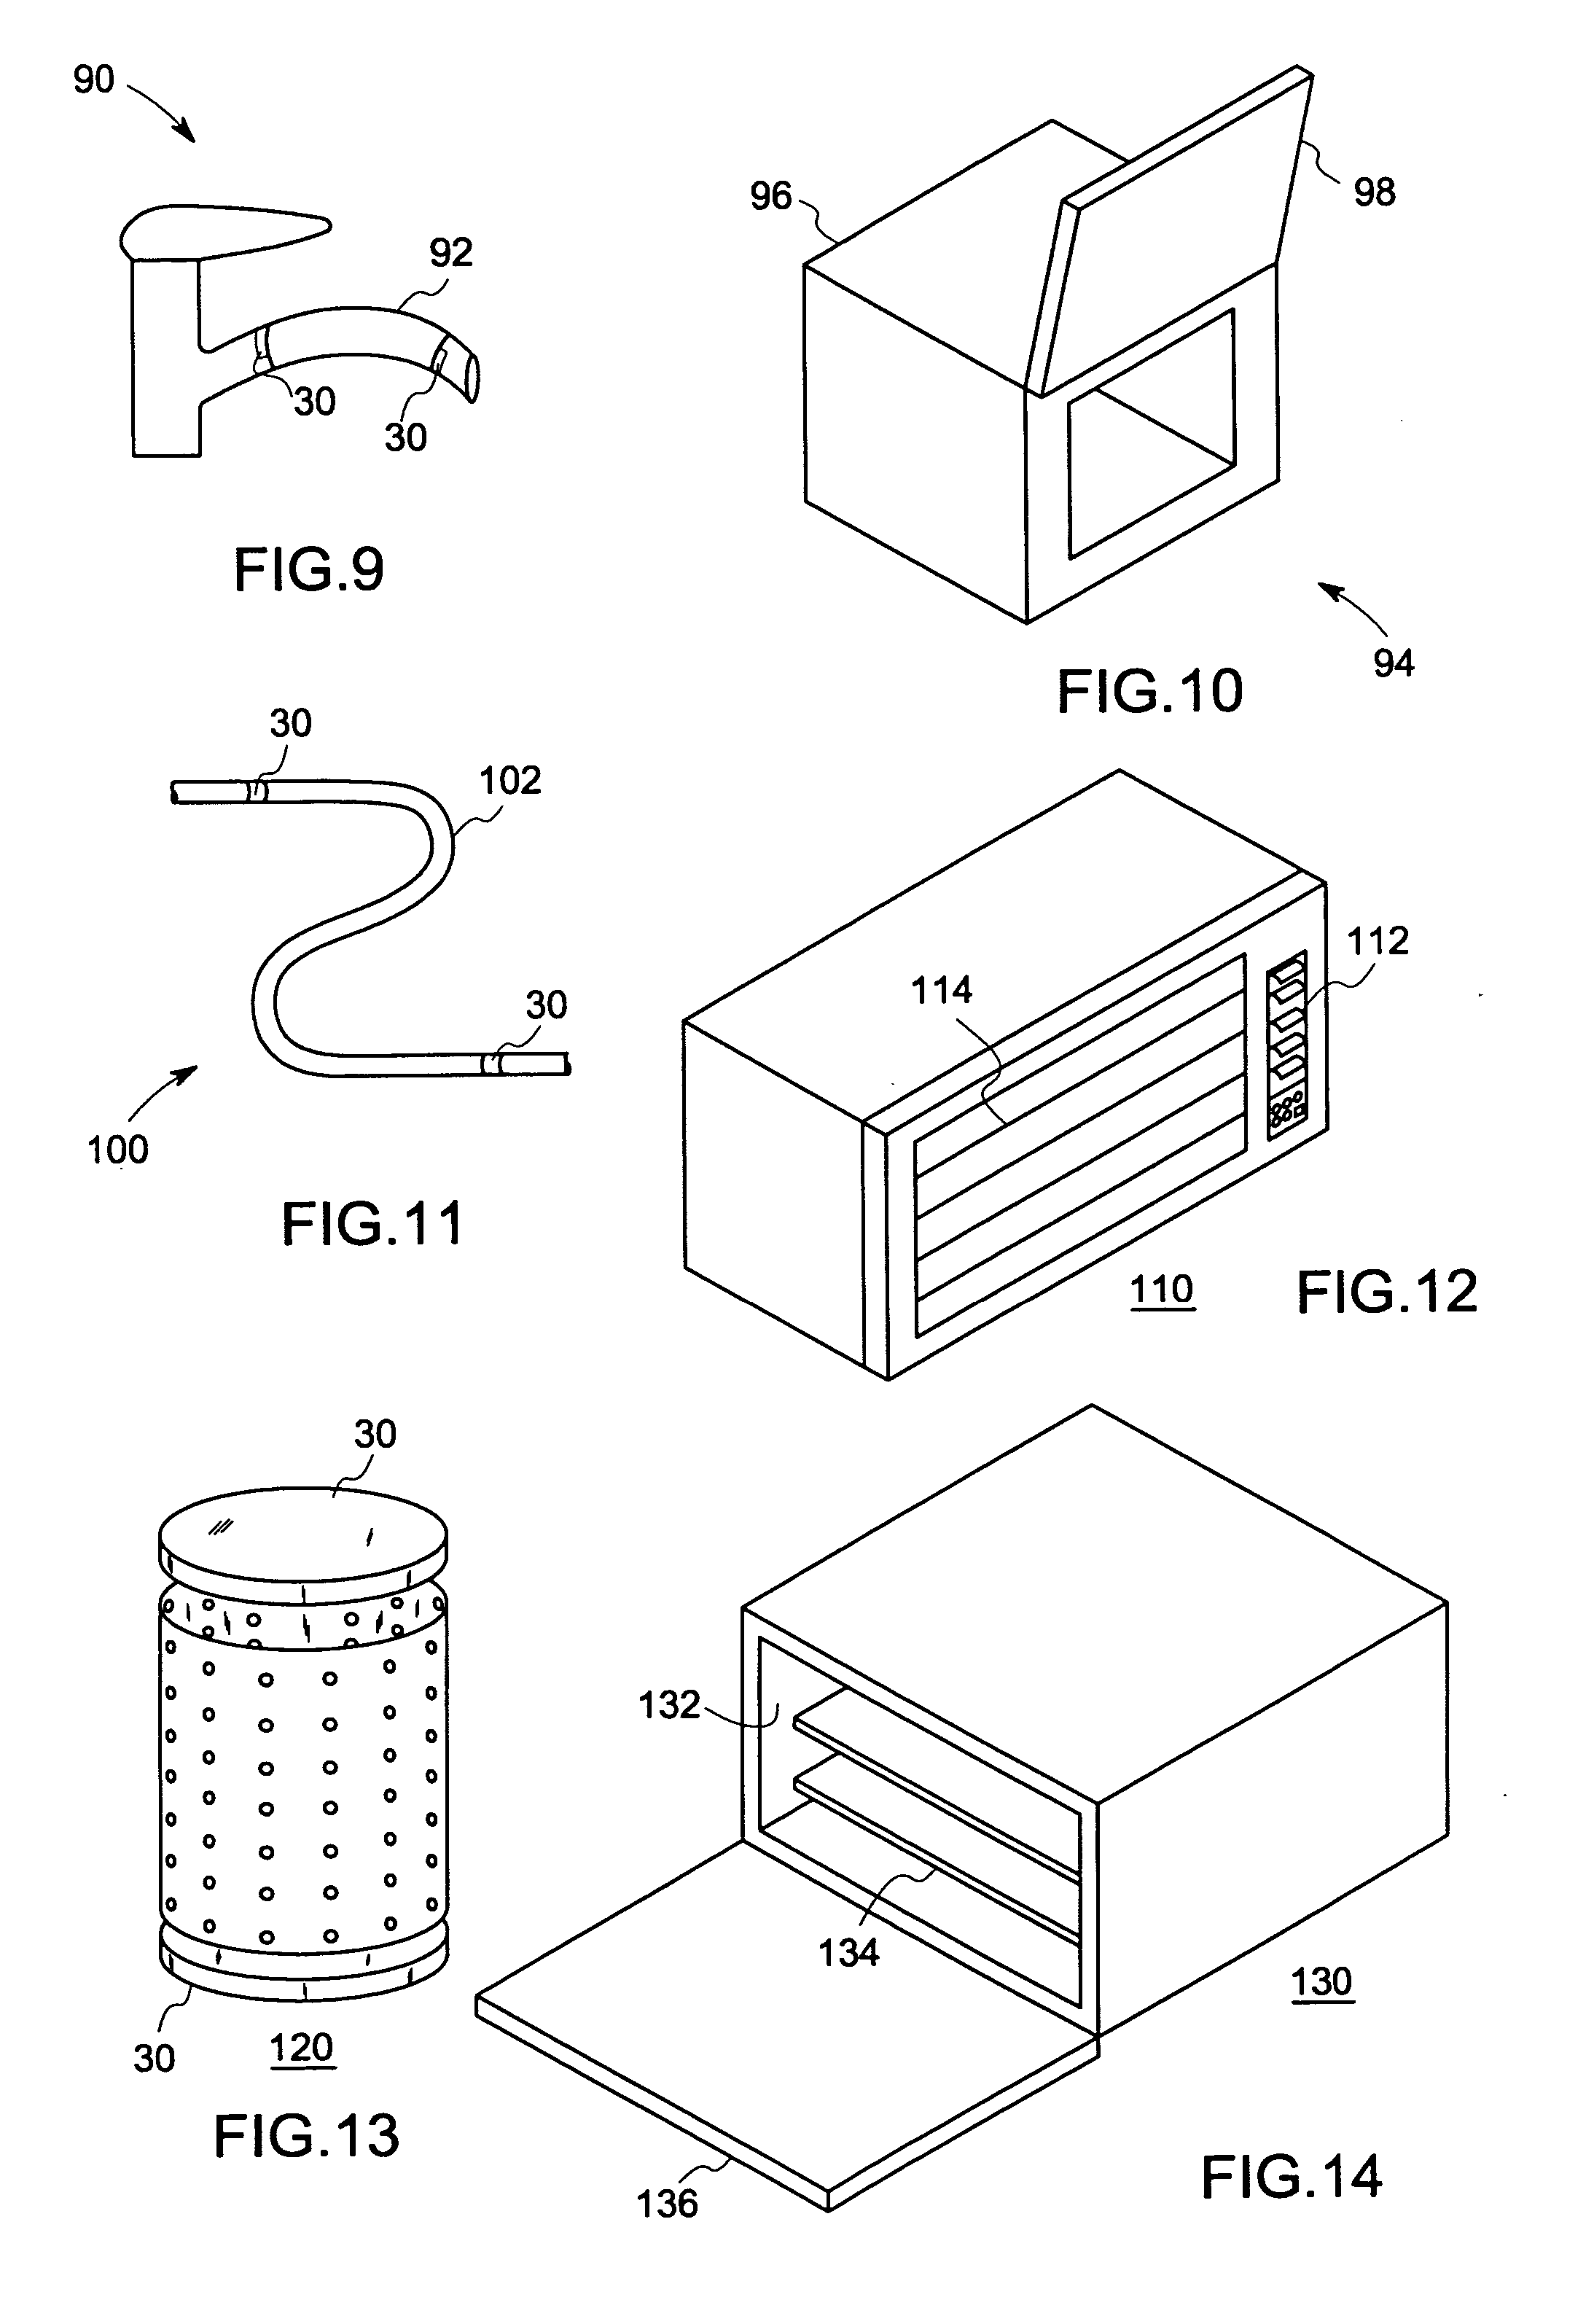 Self heating apparatus